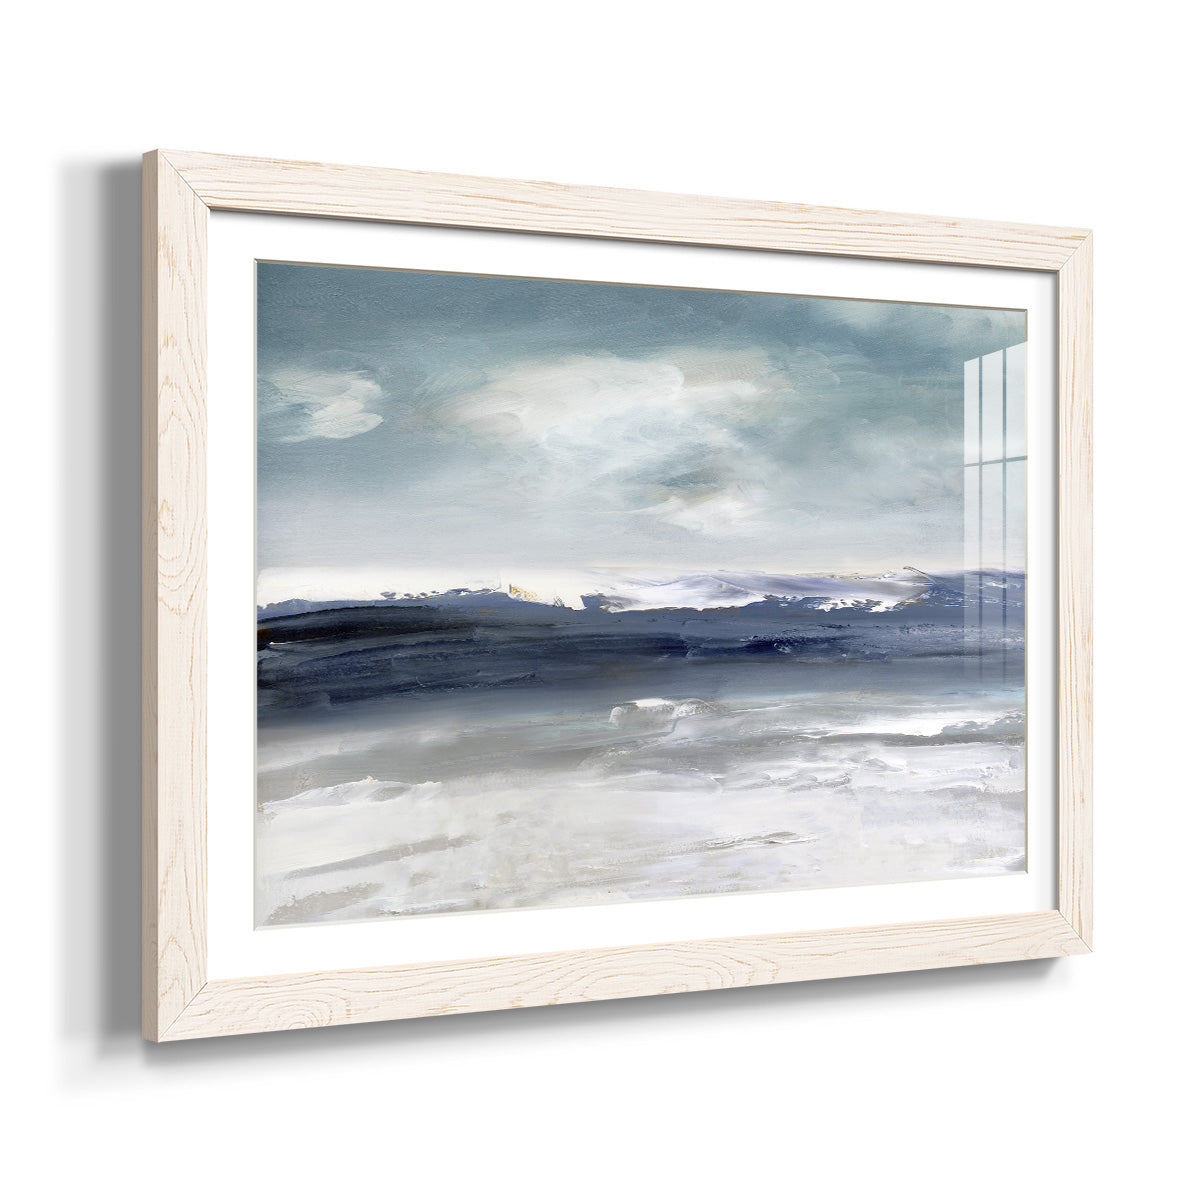 Beachcomber's Paradise-Premium Framed Print - Ready to Hang